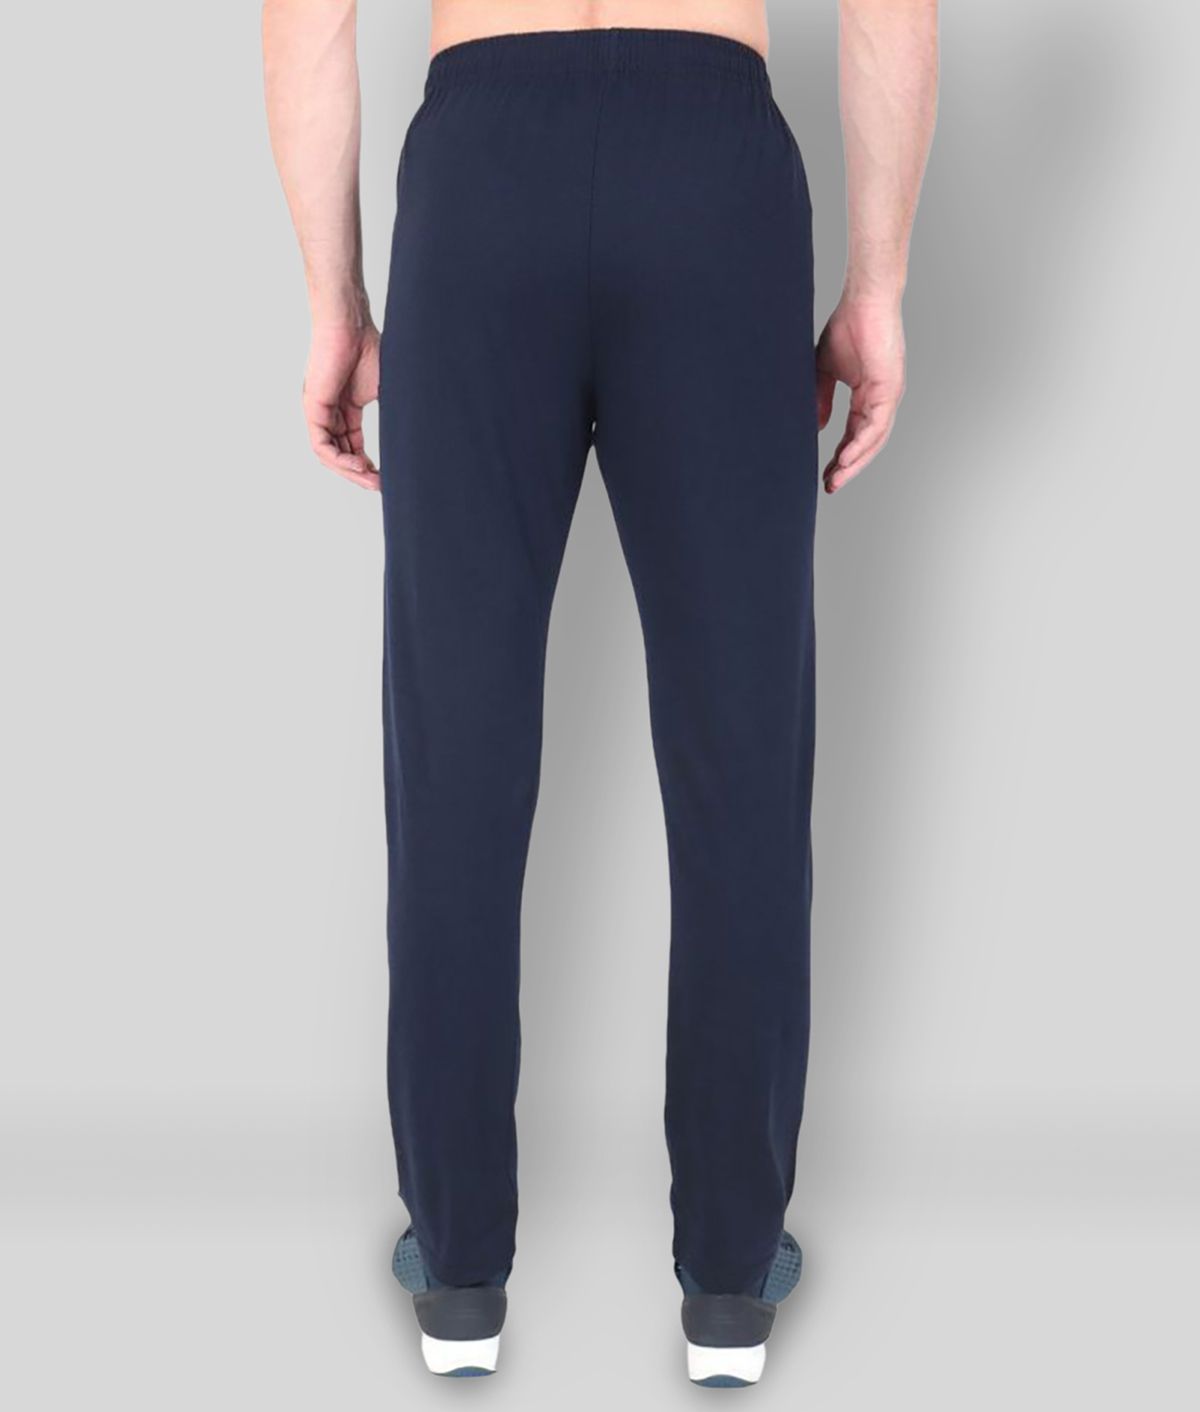 Buy Zeffit - Navy Blue Cotton Blend Men's Trackpants ( Pack of 2 ...